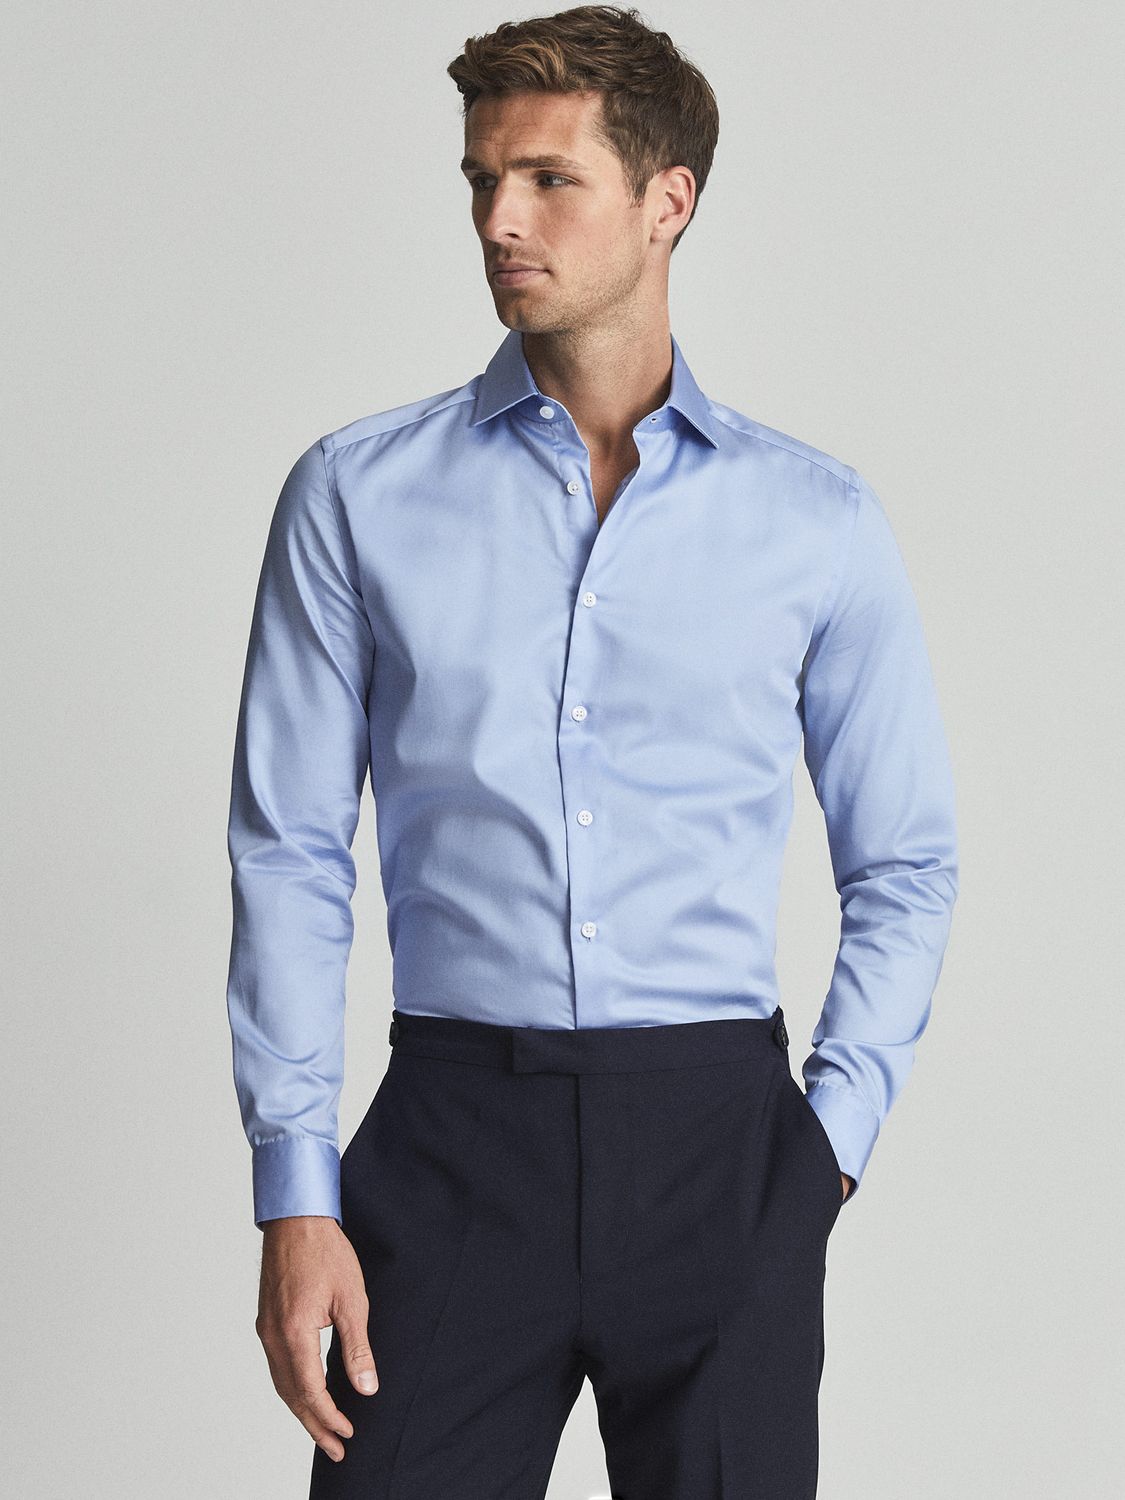 Reiss Remote Cotton Slim Fit Shirt, Mid Blue at John Lewis & Partners